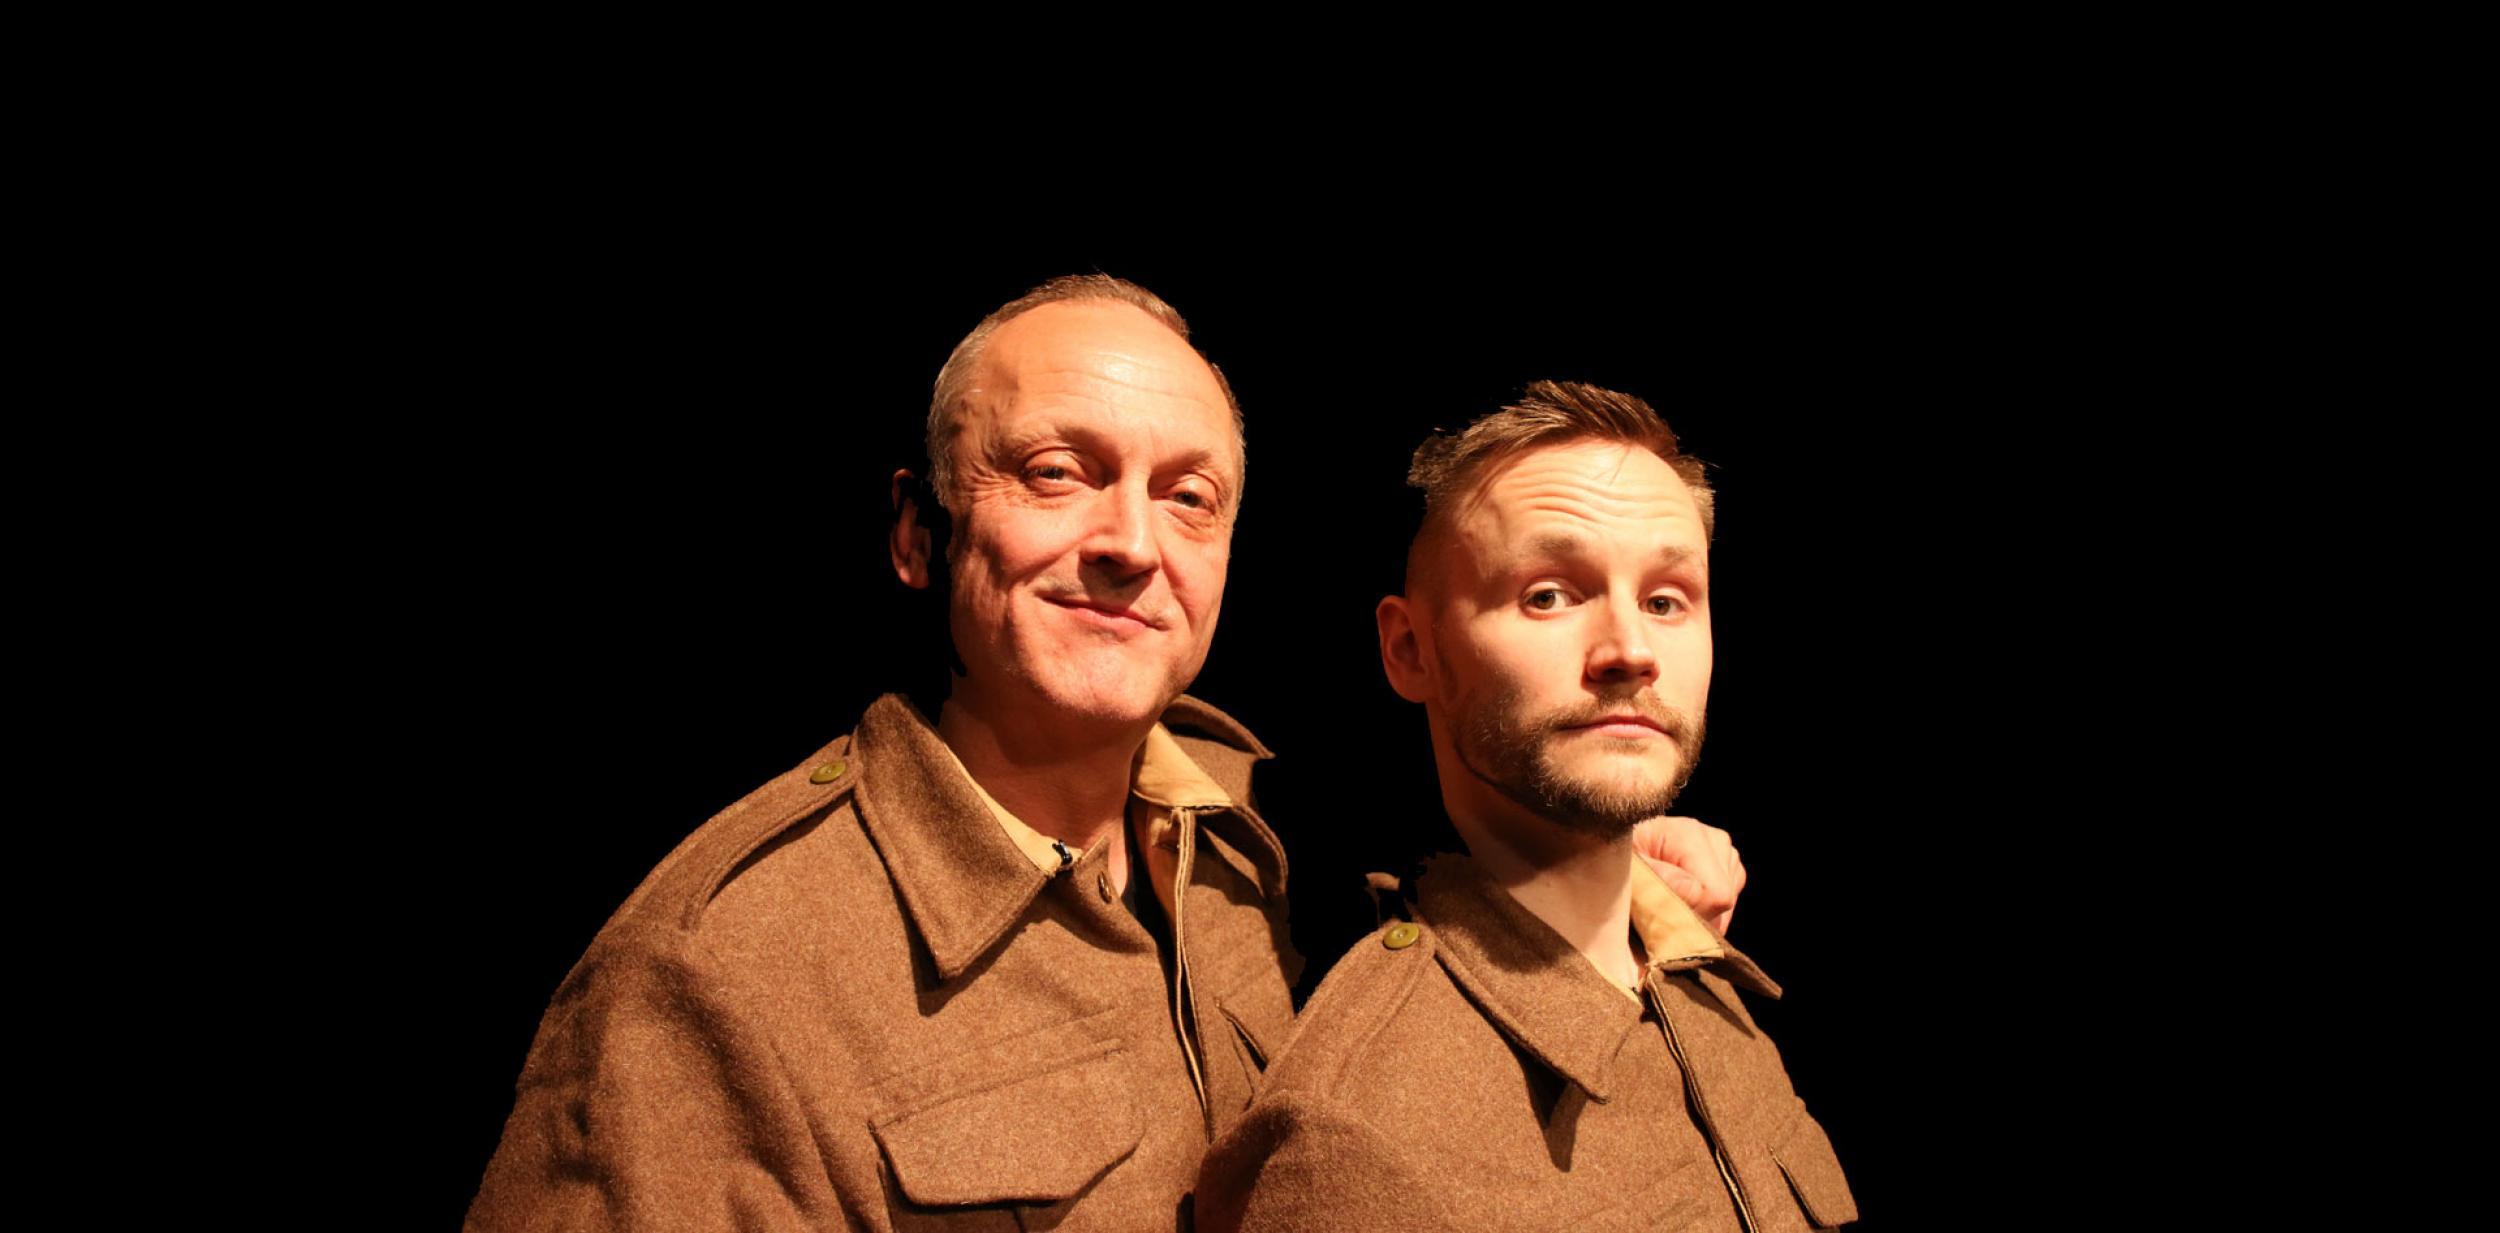 Two men in second world war uniforms